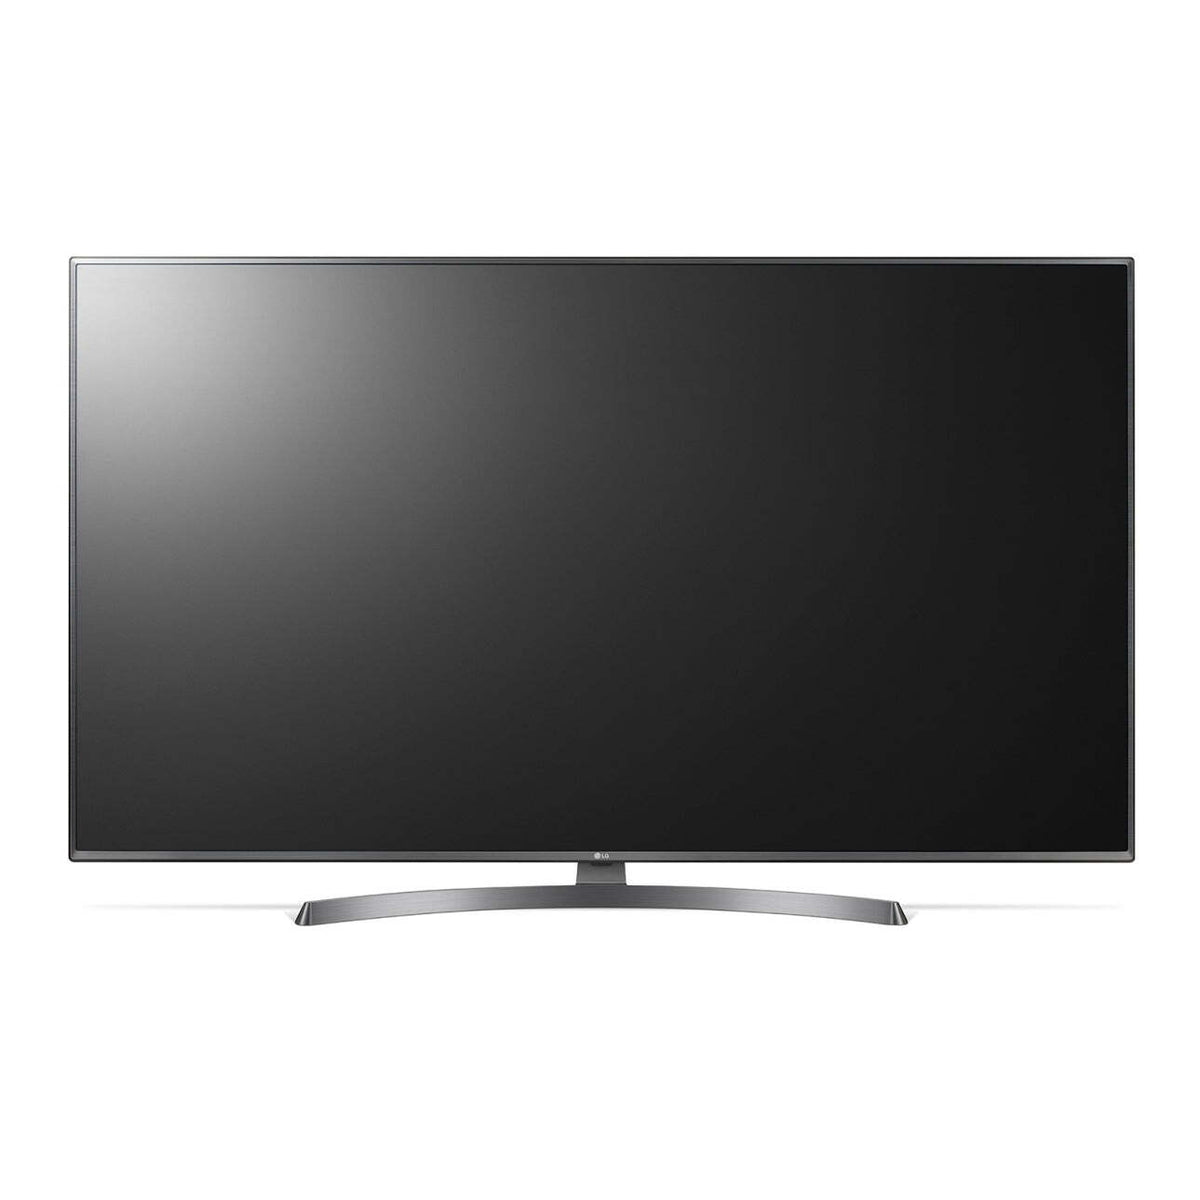 Smart televízor LG 55UK6750PLD (2018) / 55&quot; (139 cm)